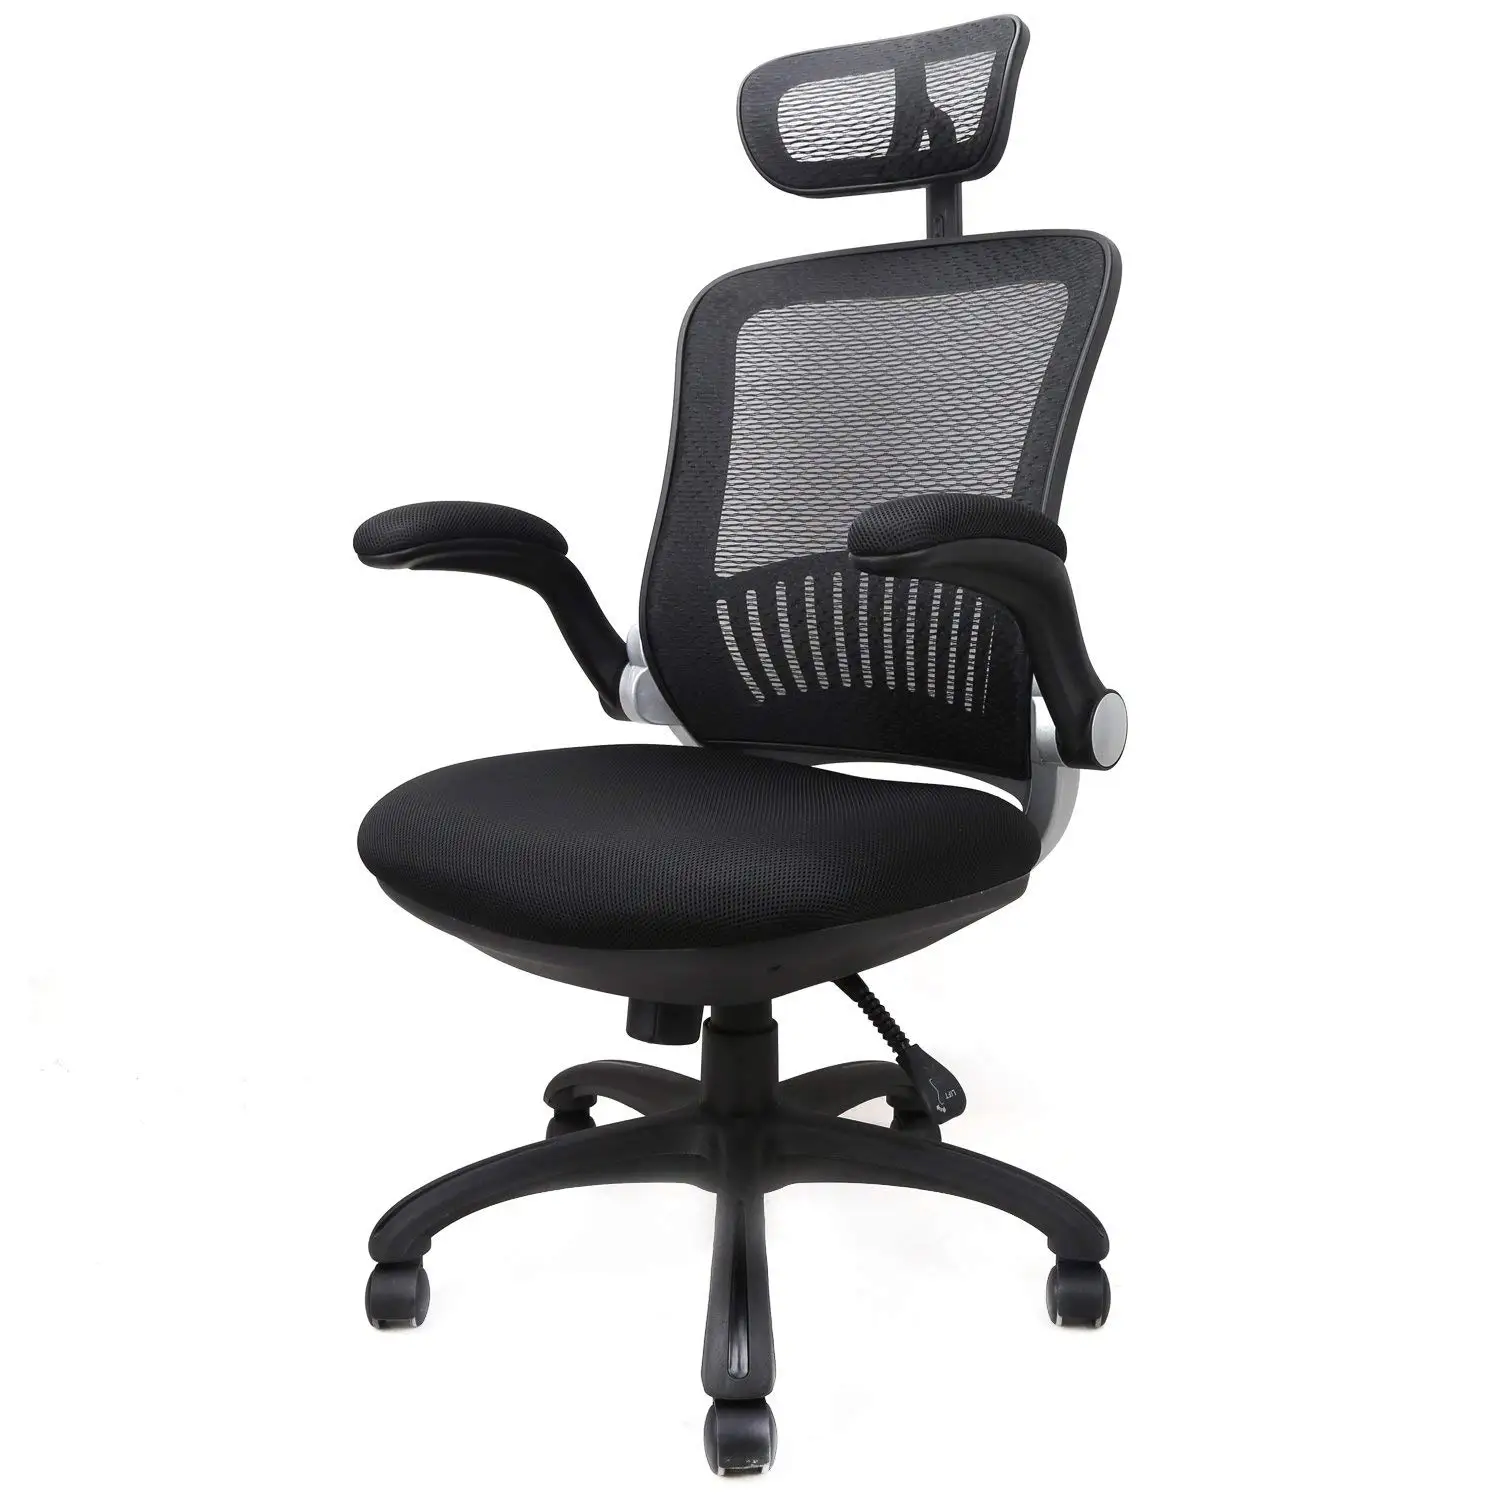 Buy Komene Ergonomic Mesh Office Chair, High Back Computer